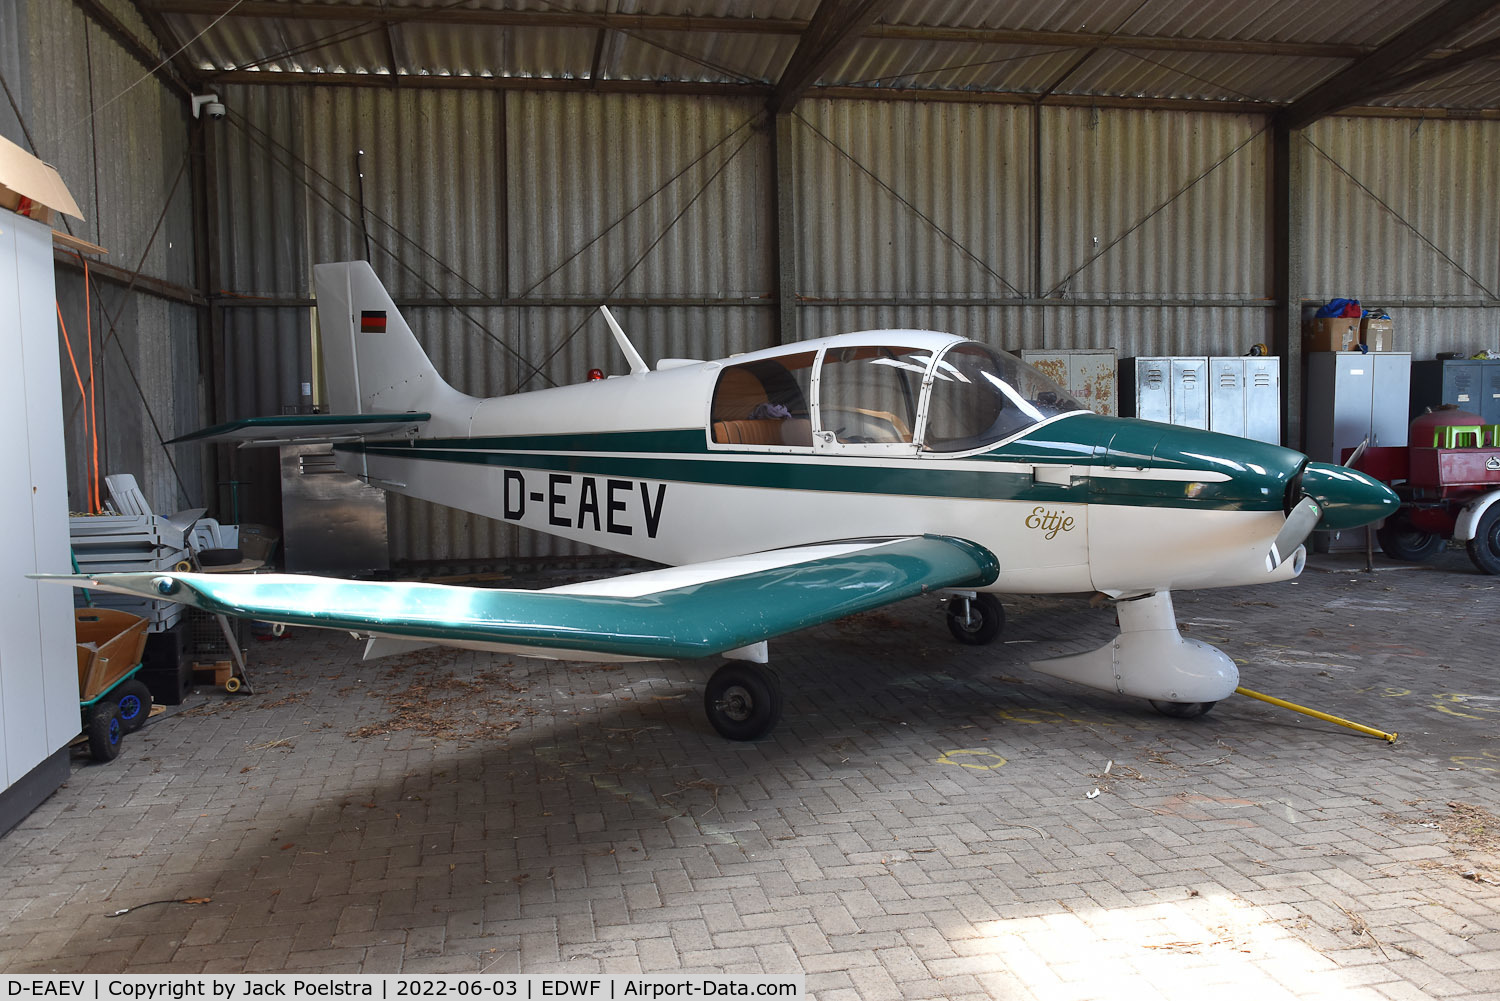 D-EAEV, Robin DR-300-108 2+2 C/N 0556, Based at Leer-Papenburg airport